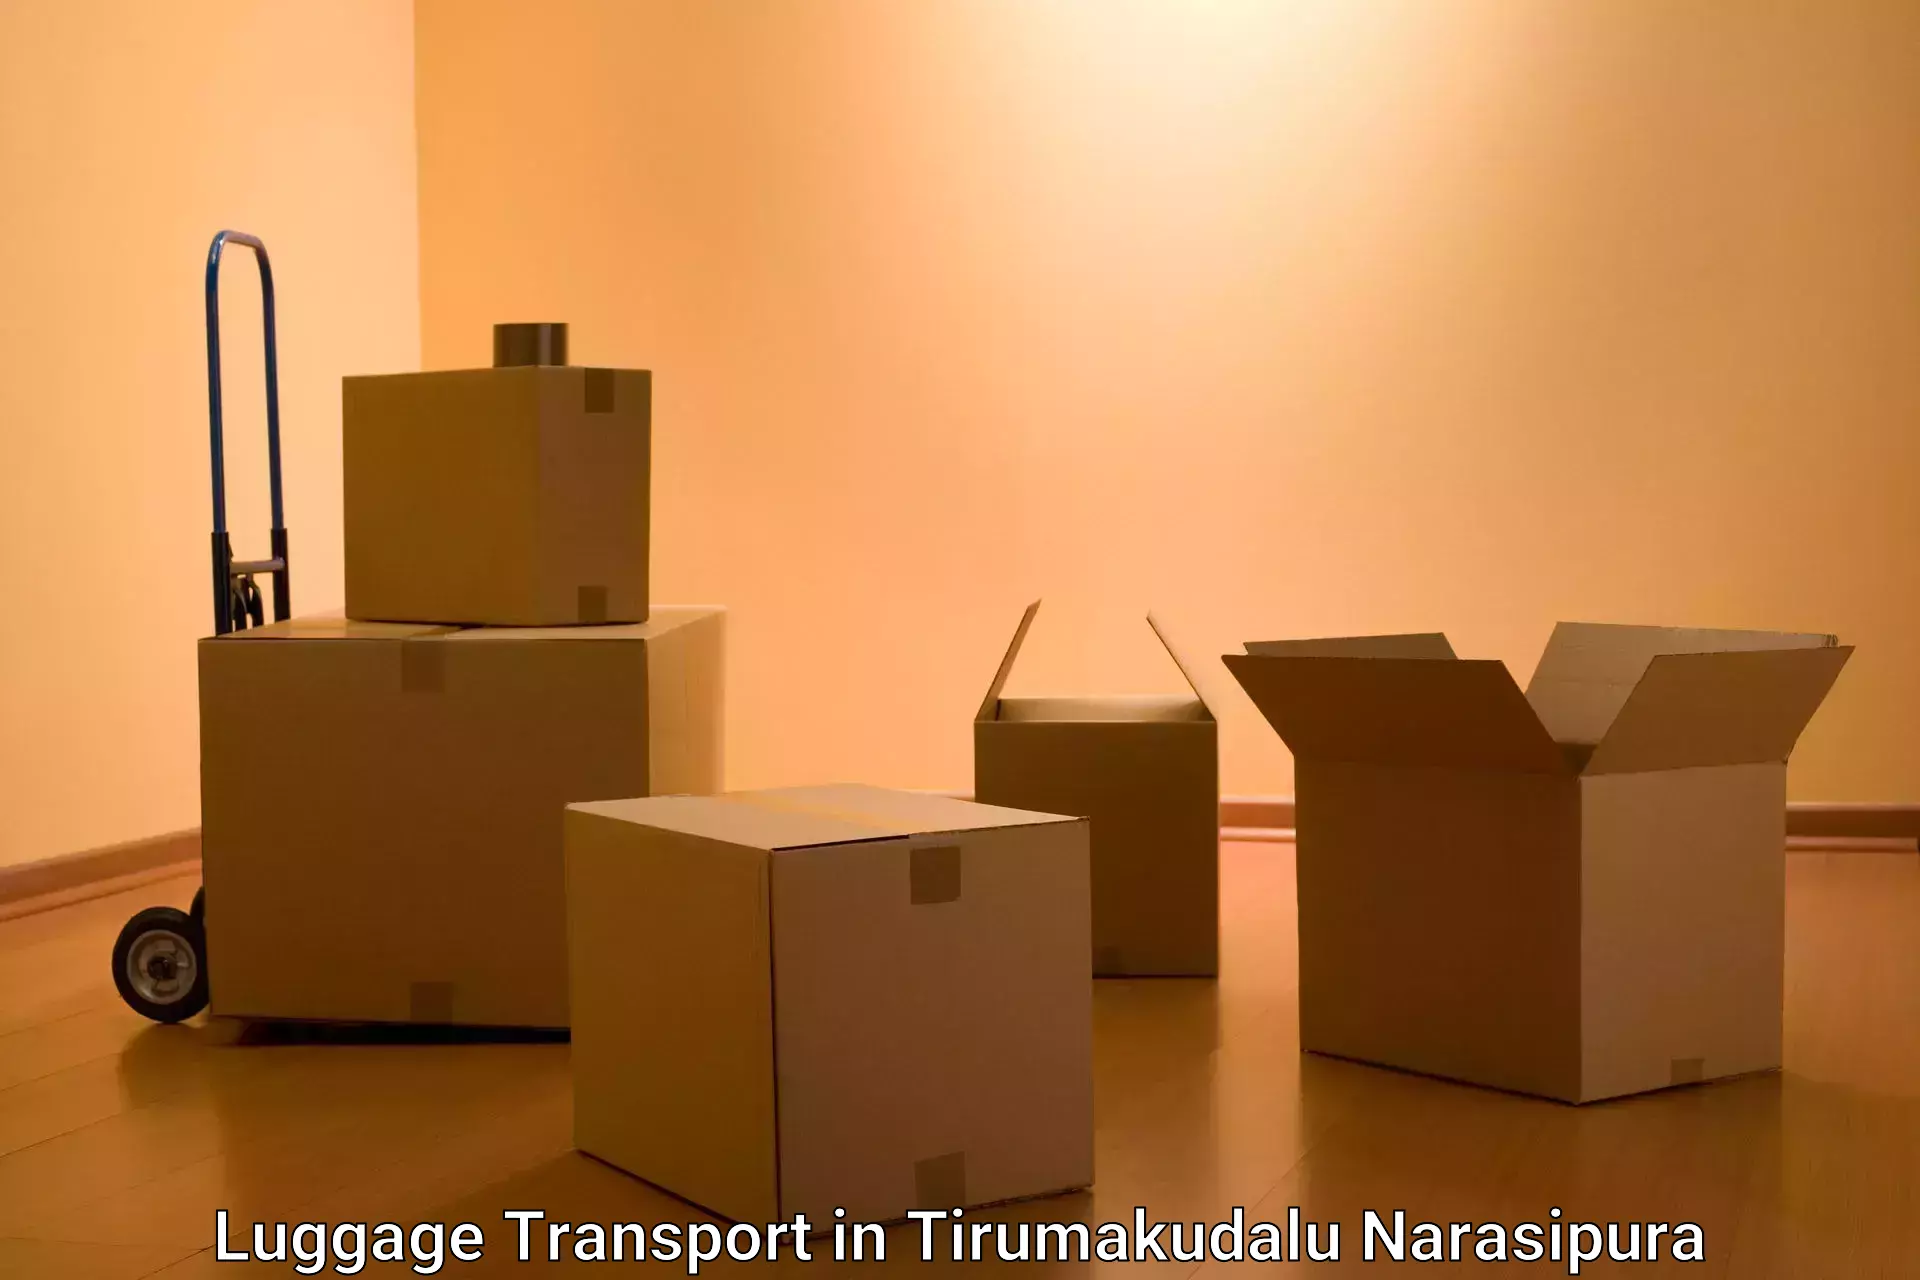 Regional luggage transport in Tirumakudalu Narasipura